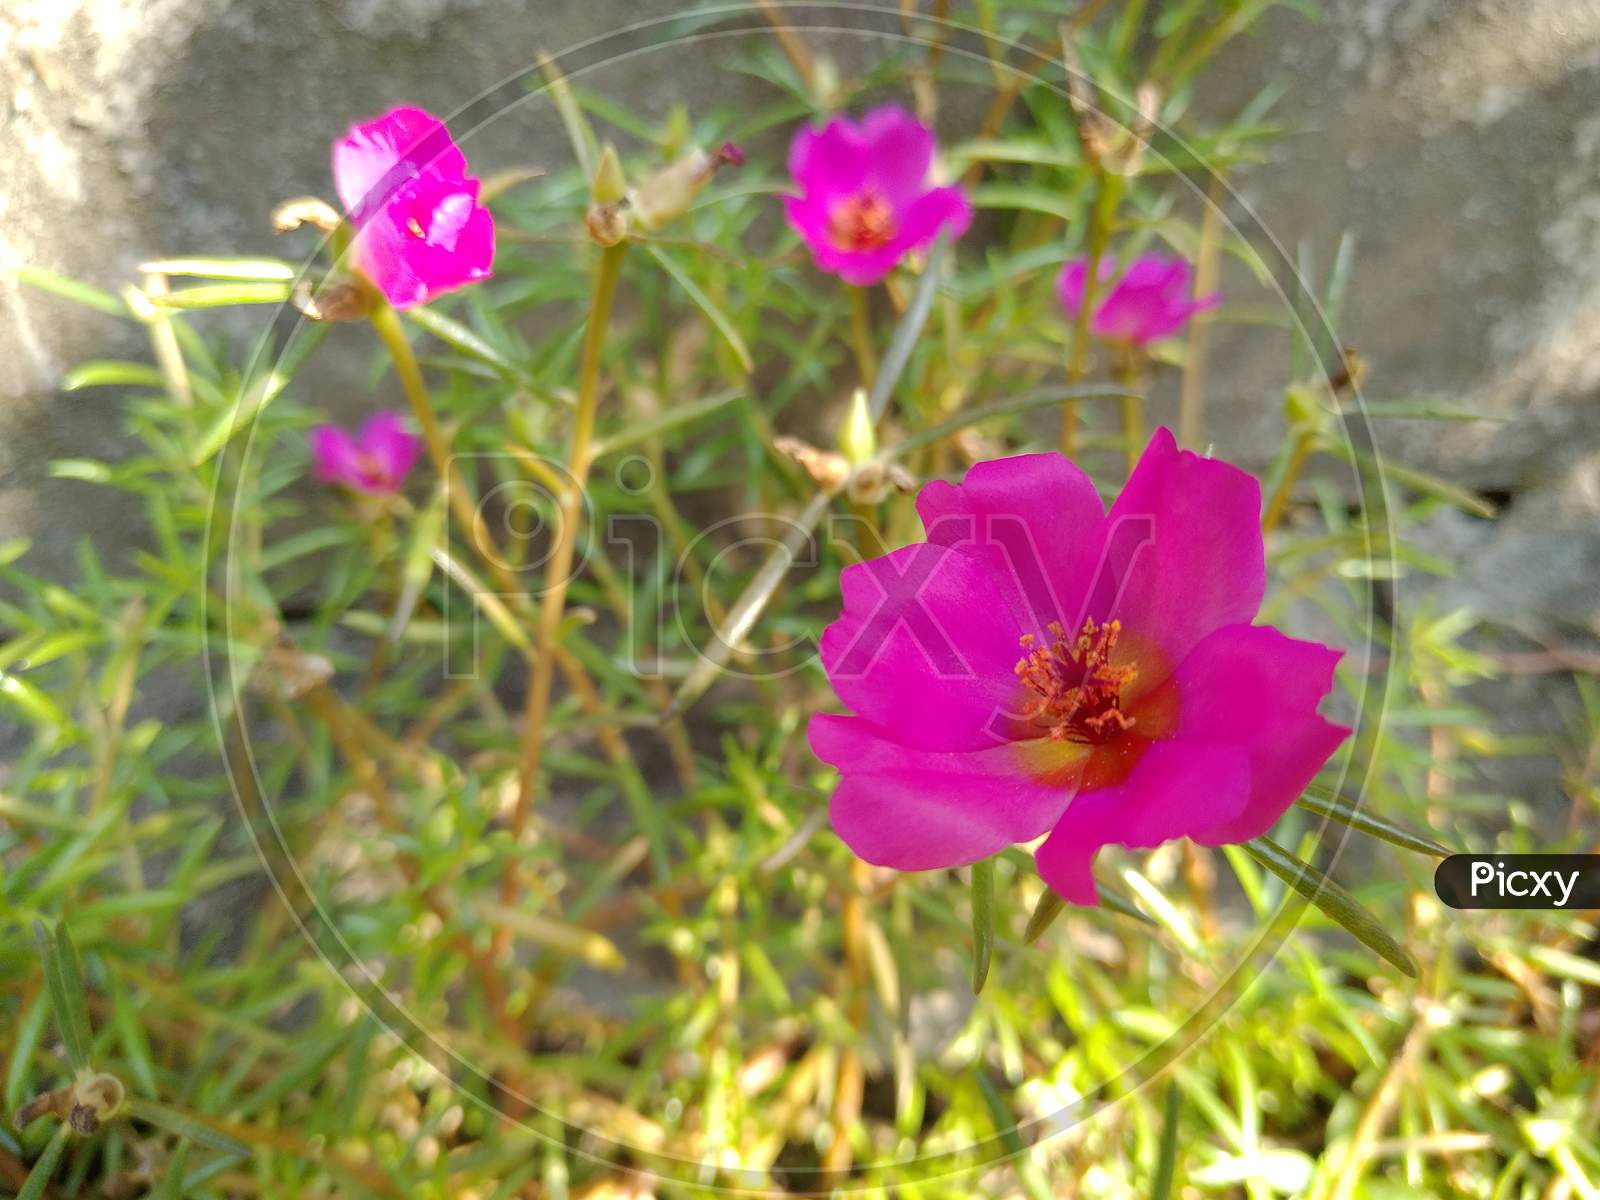 Pink Moss rose flowers